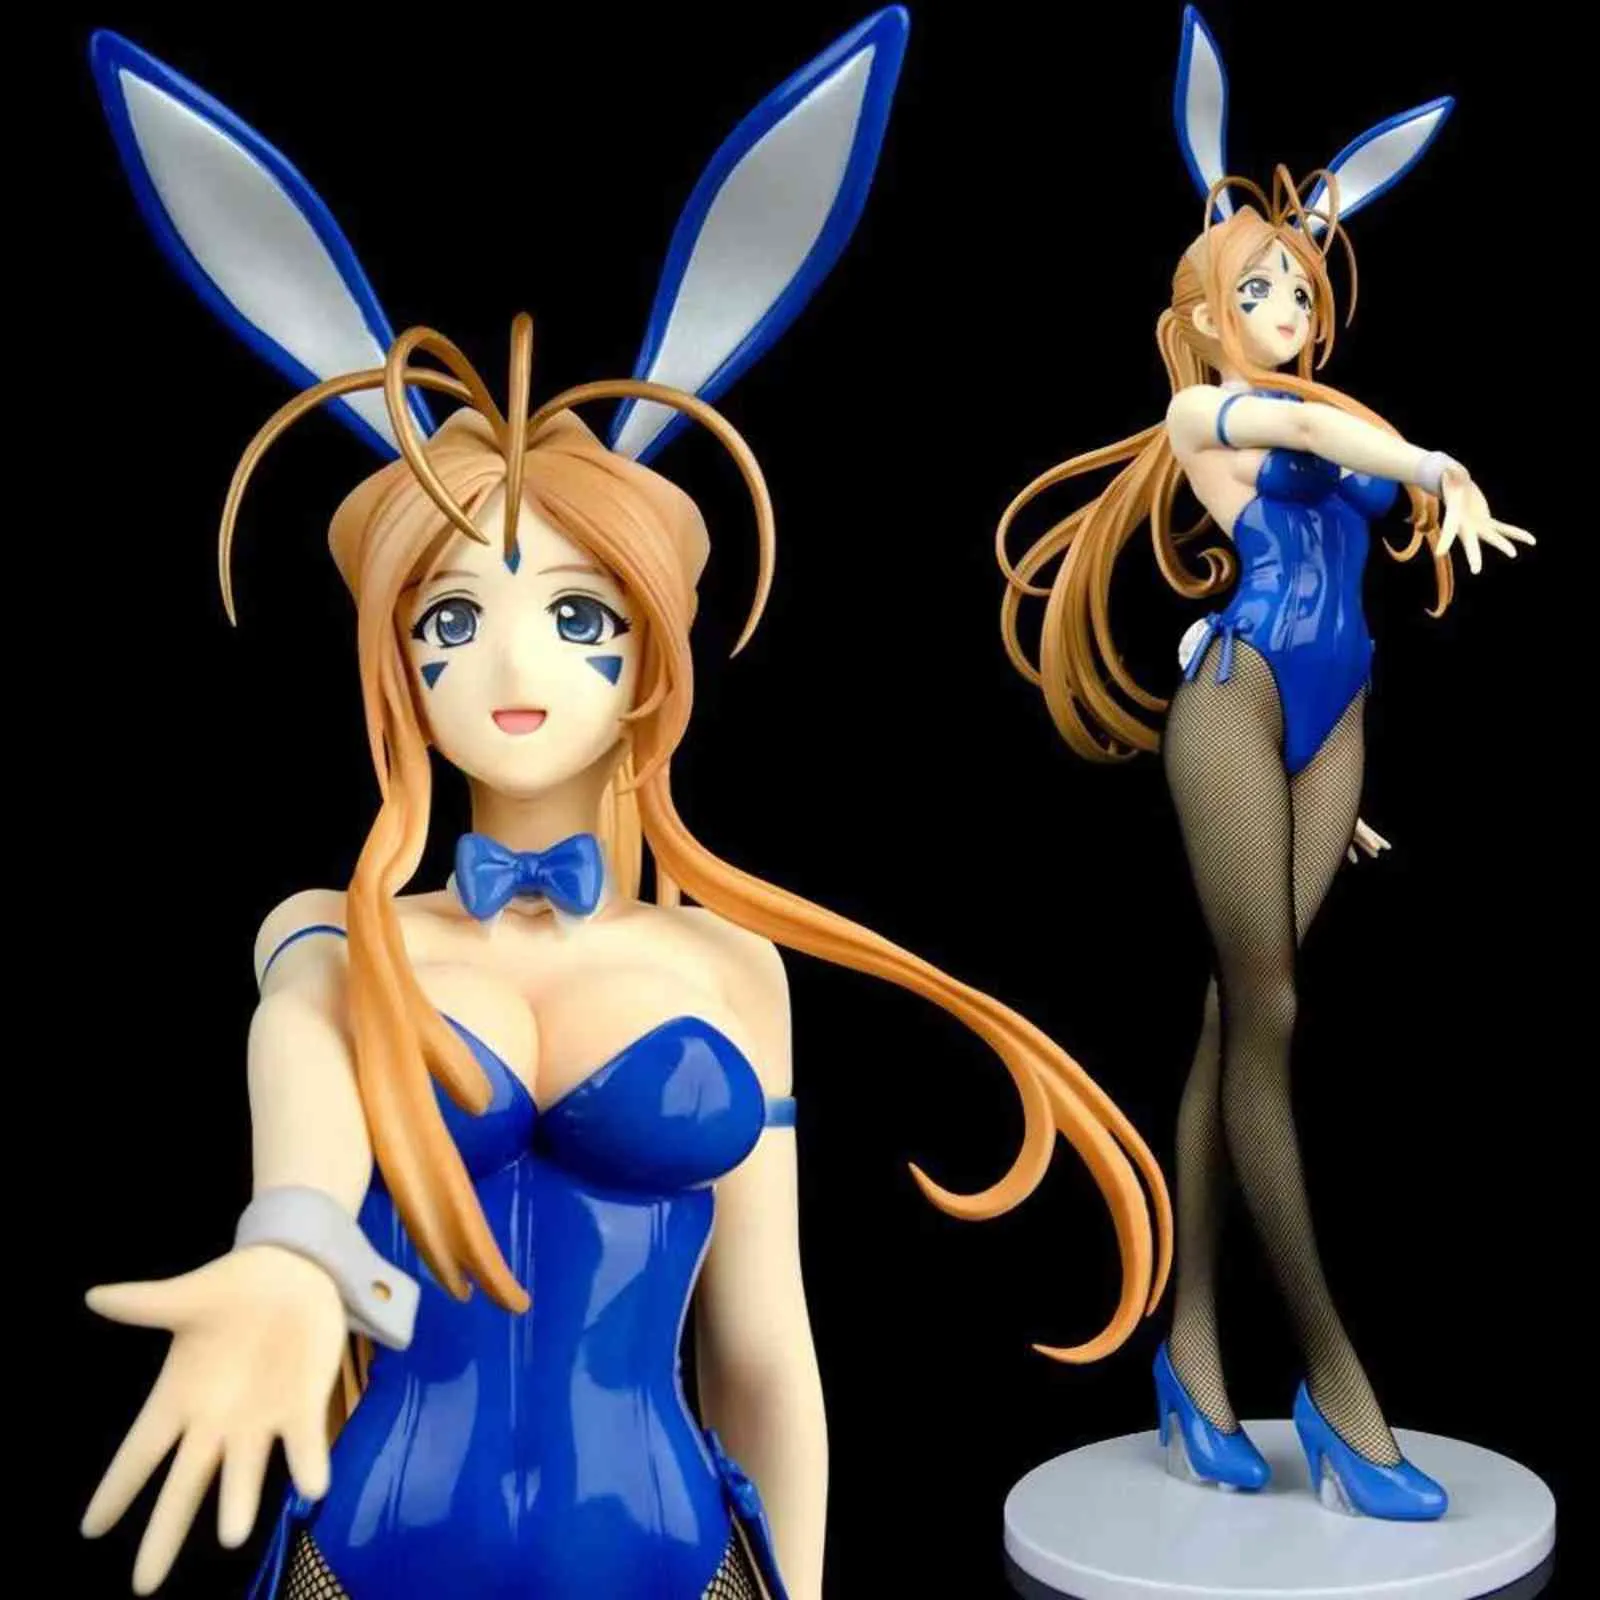 42 cm 14 Scala ing Bstyle Anime Oh My Dea Belldandy Bunny Girl Pvc Action Figure Toy Toy Adult Collection Regali della bambola modello H14610317